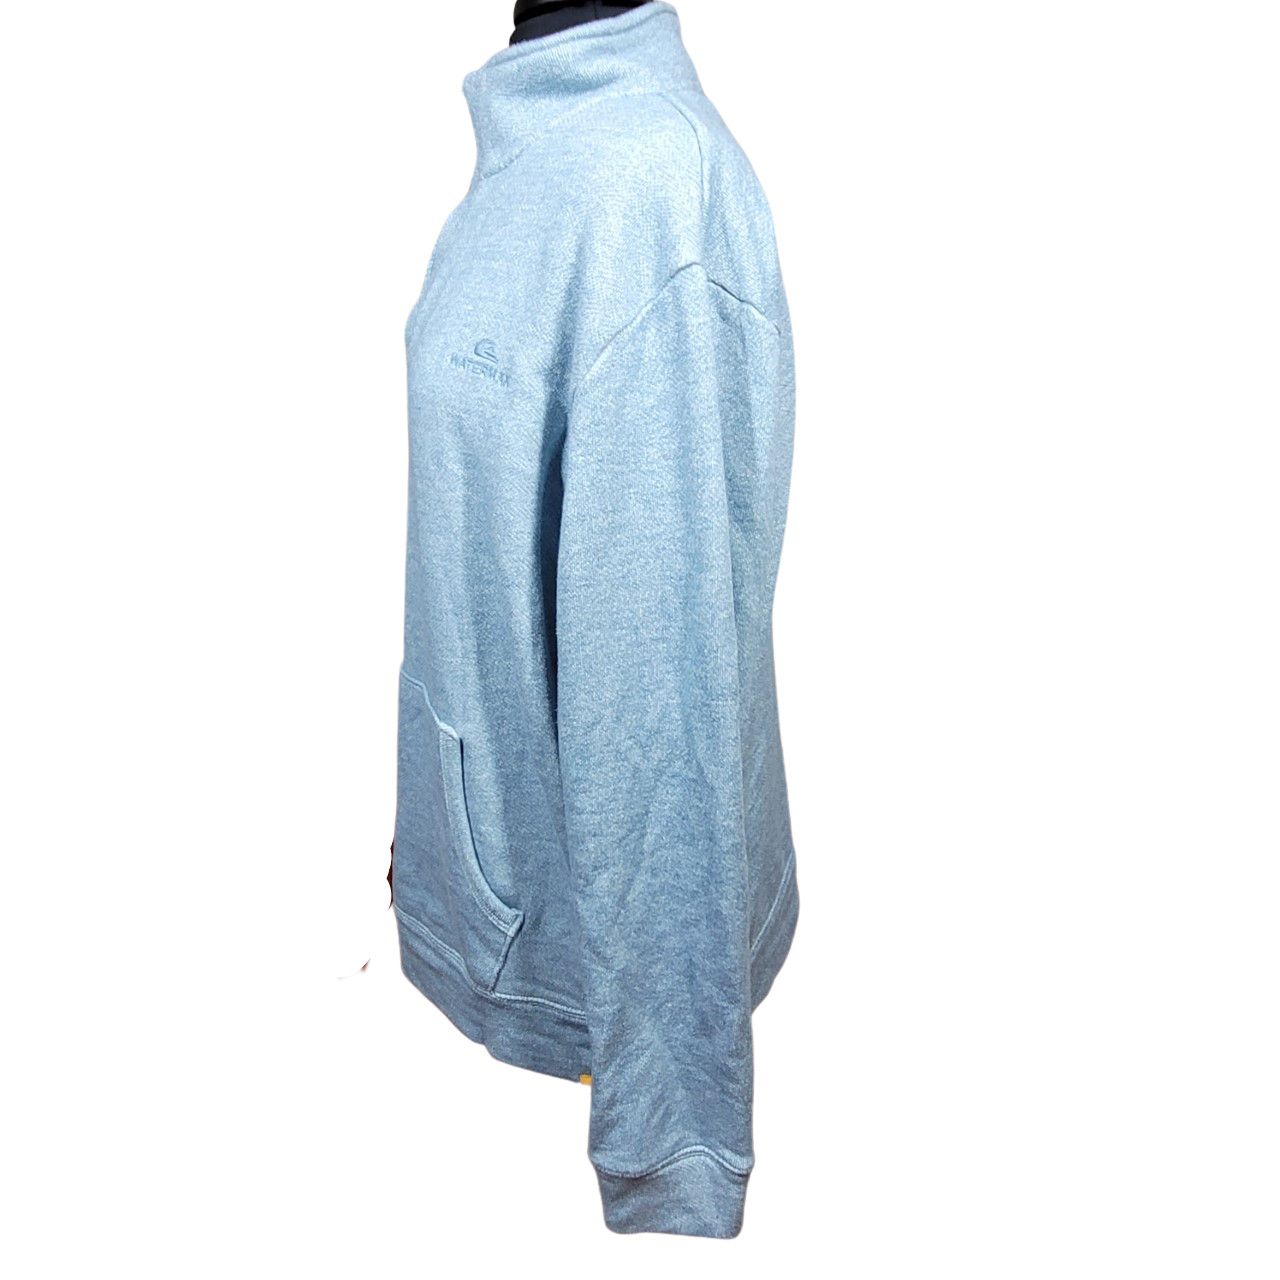 Quicksilver Waterman Pointsurf Zip Mock Neck Sweatshirt Size Large Size L / US 10 / IT 46 - 3 Thumbnail